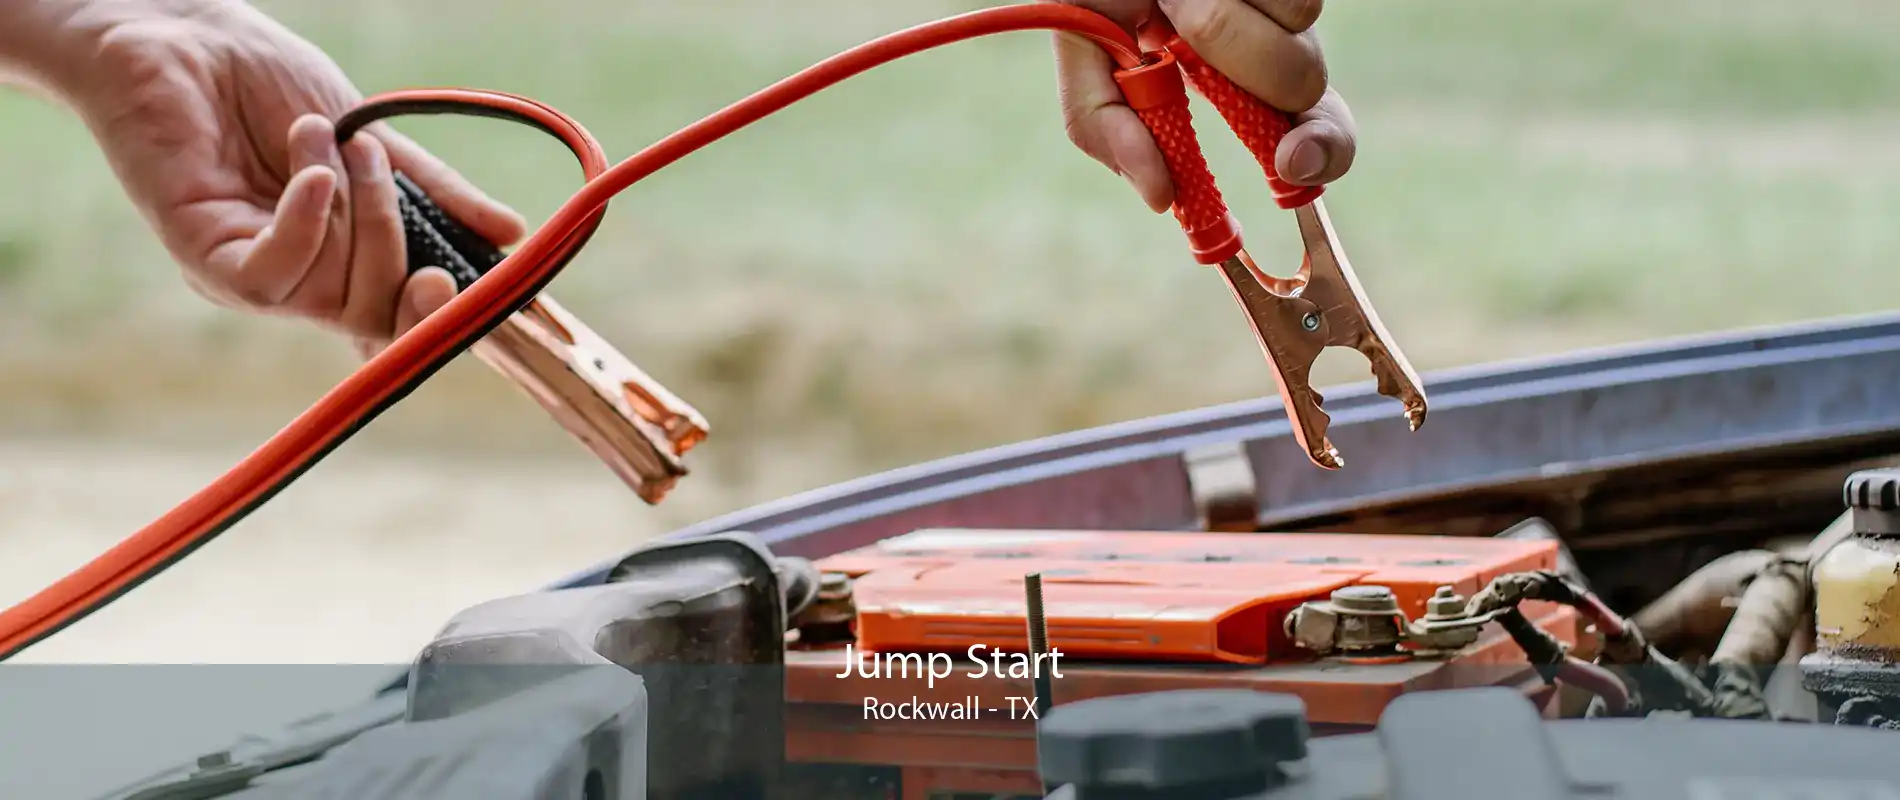 Jump Start Rockwall - TX